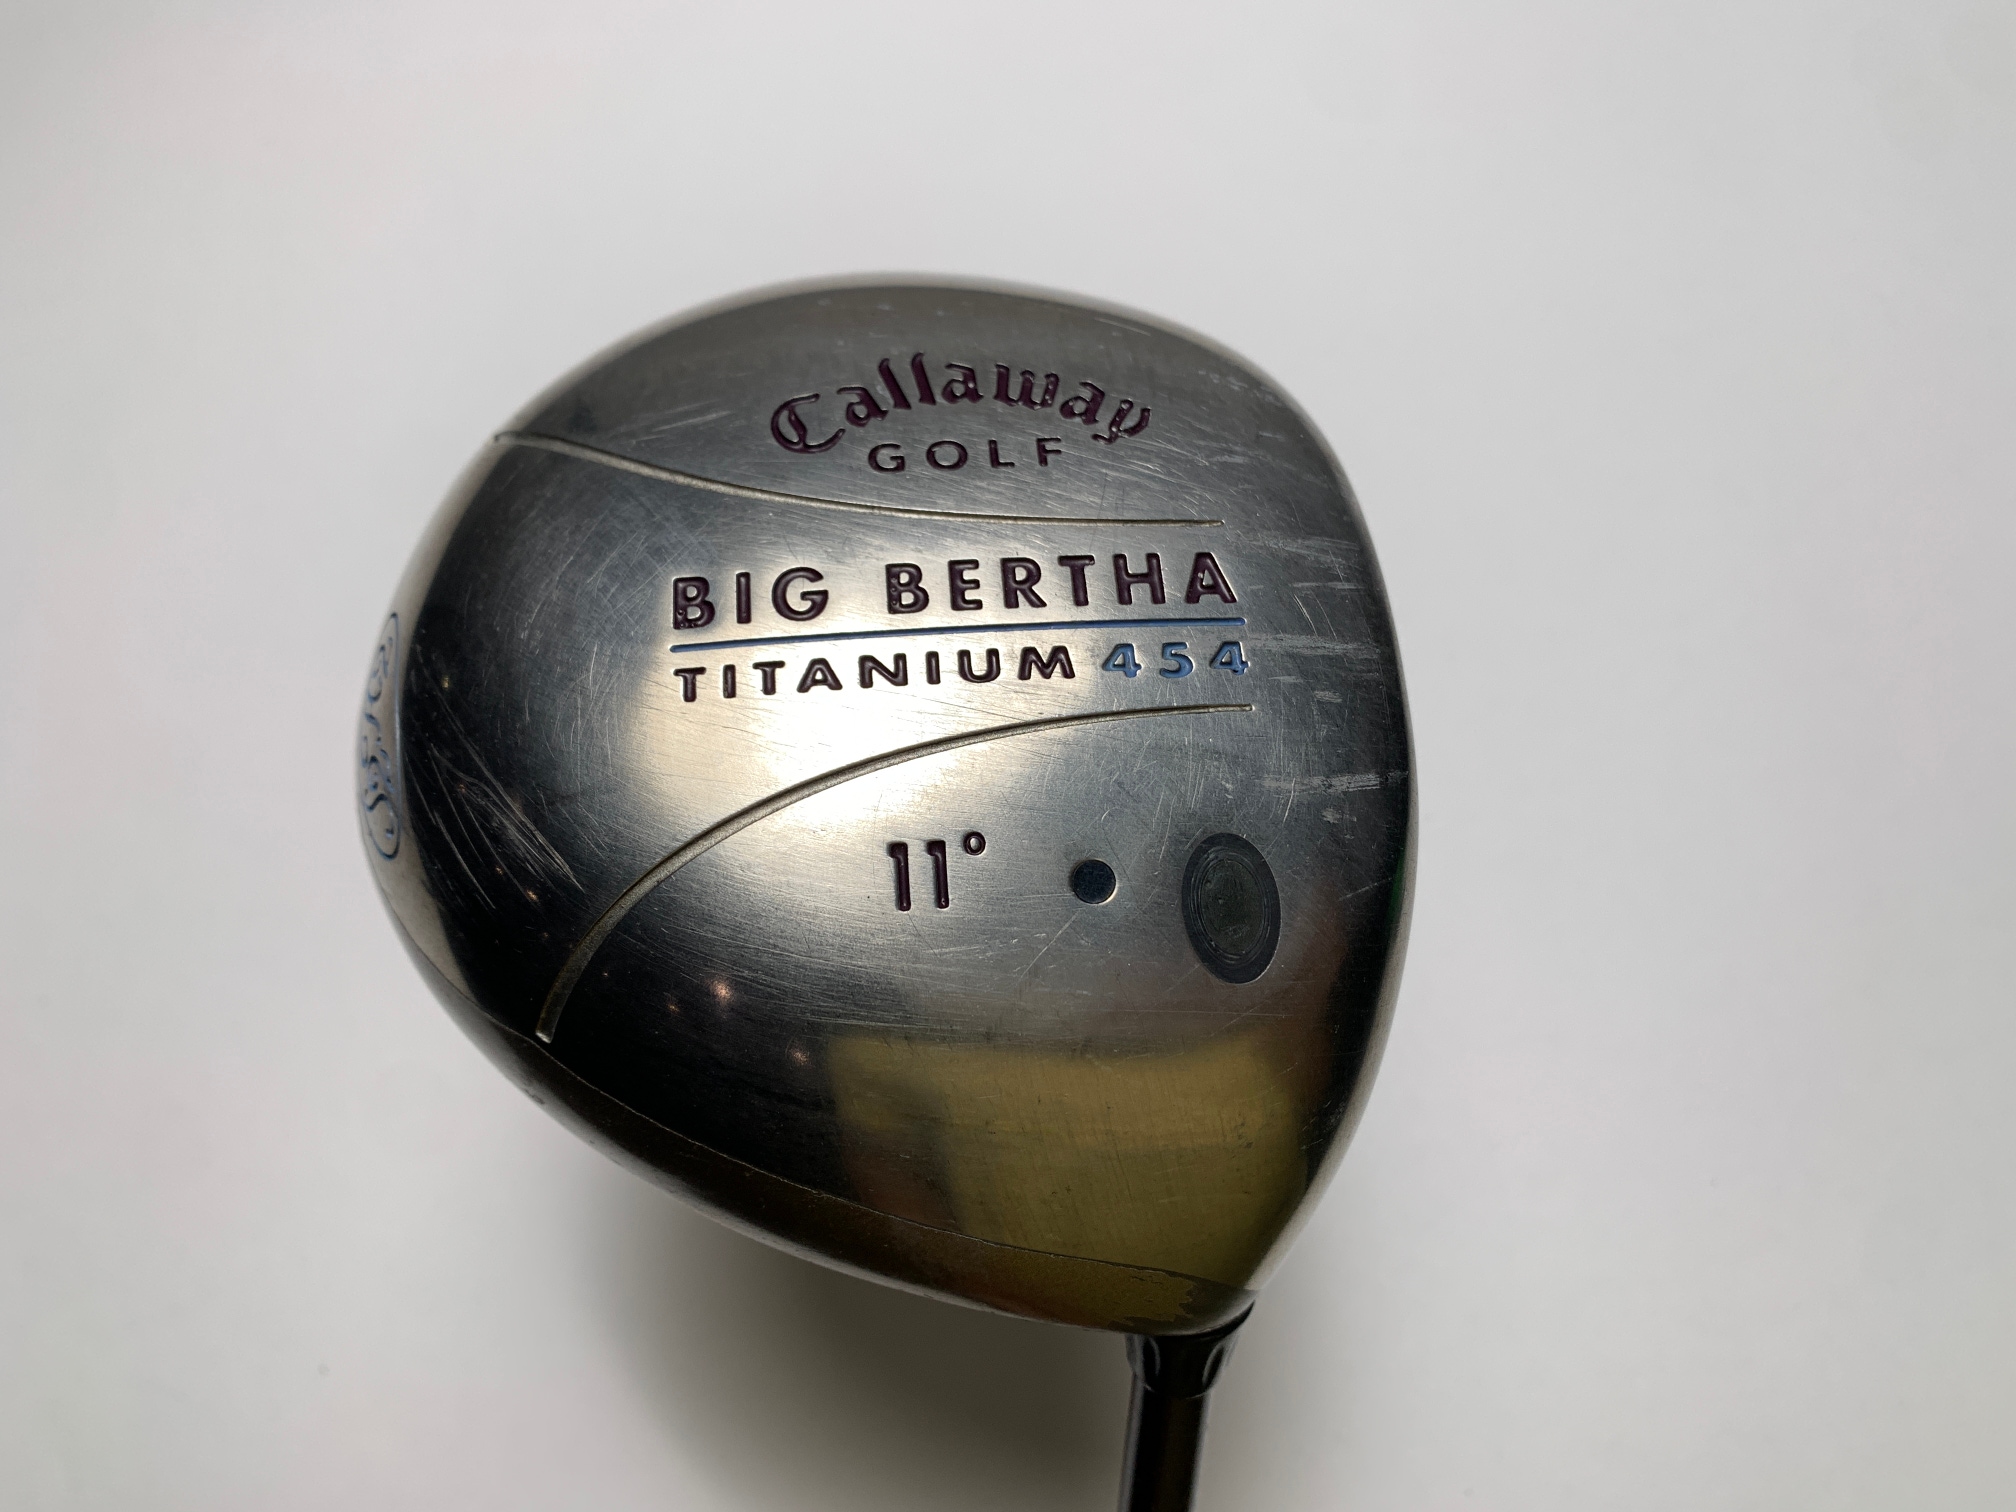 Callaway Big Bertha Titanium 454 Driver 11* Big Bertha Gems 55 Ladies RH